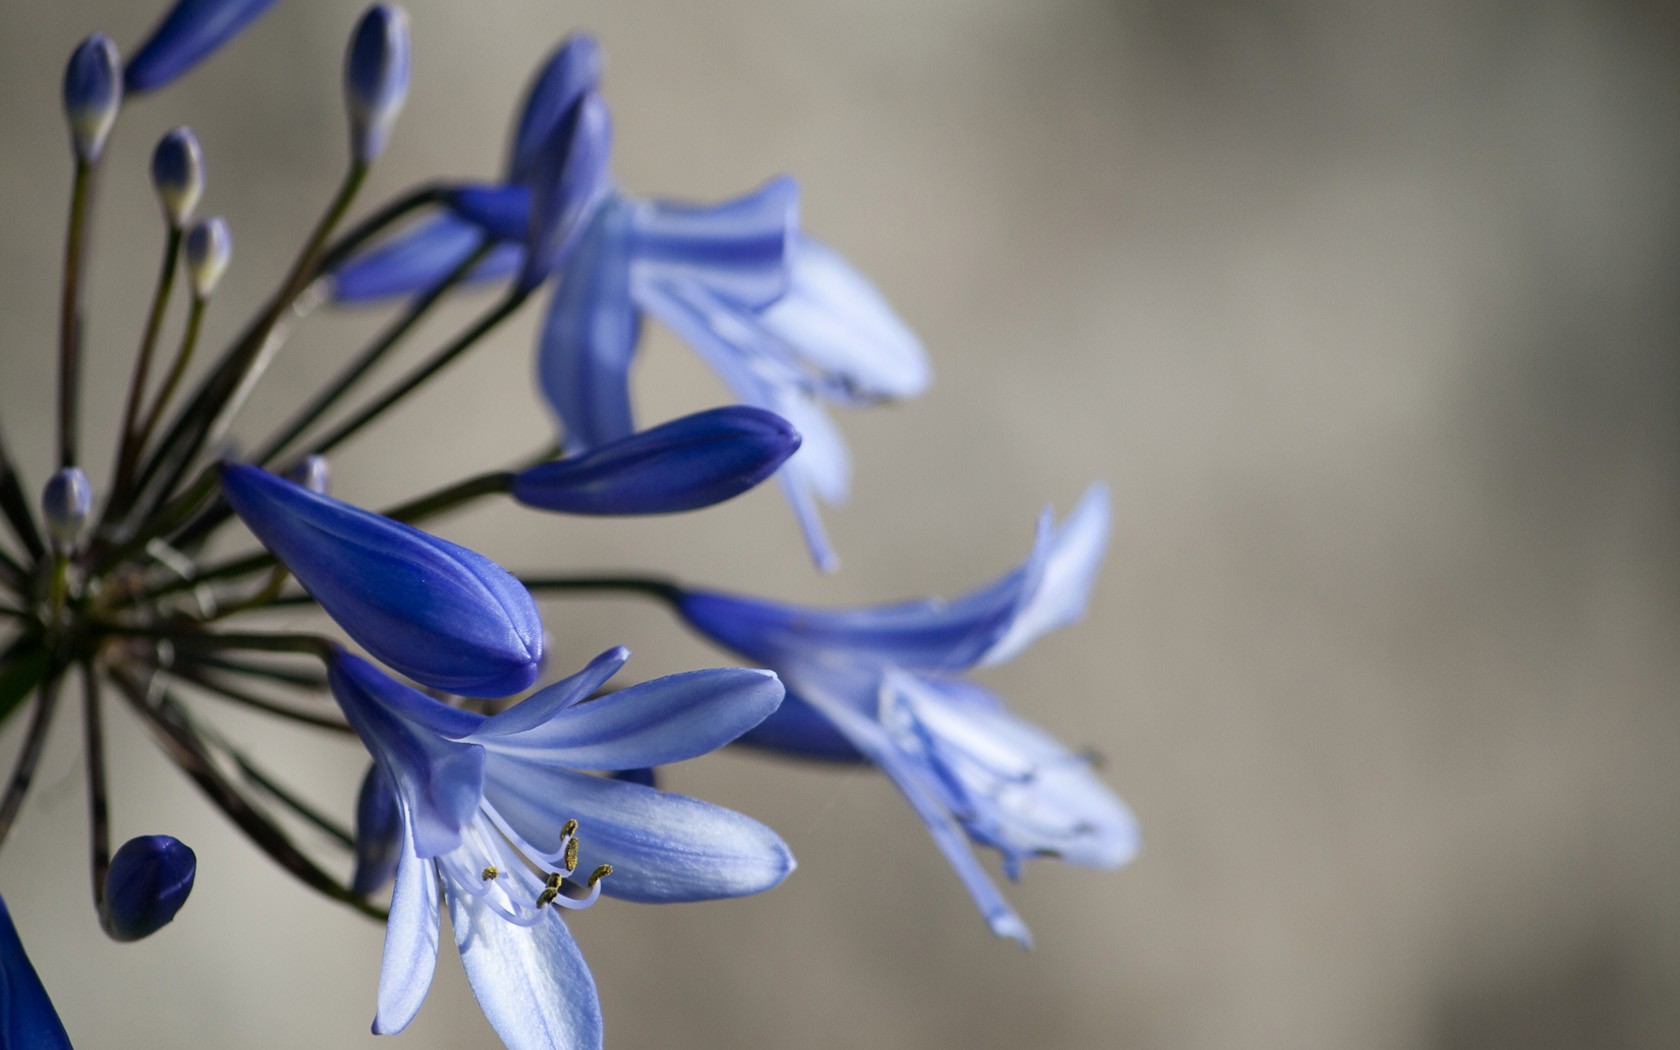 General 1680x1050 lilies flowers blue flowers macro plants